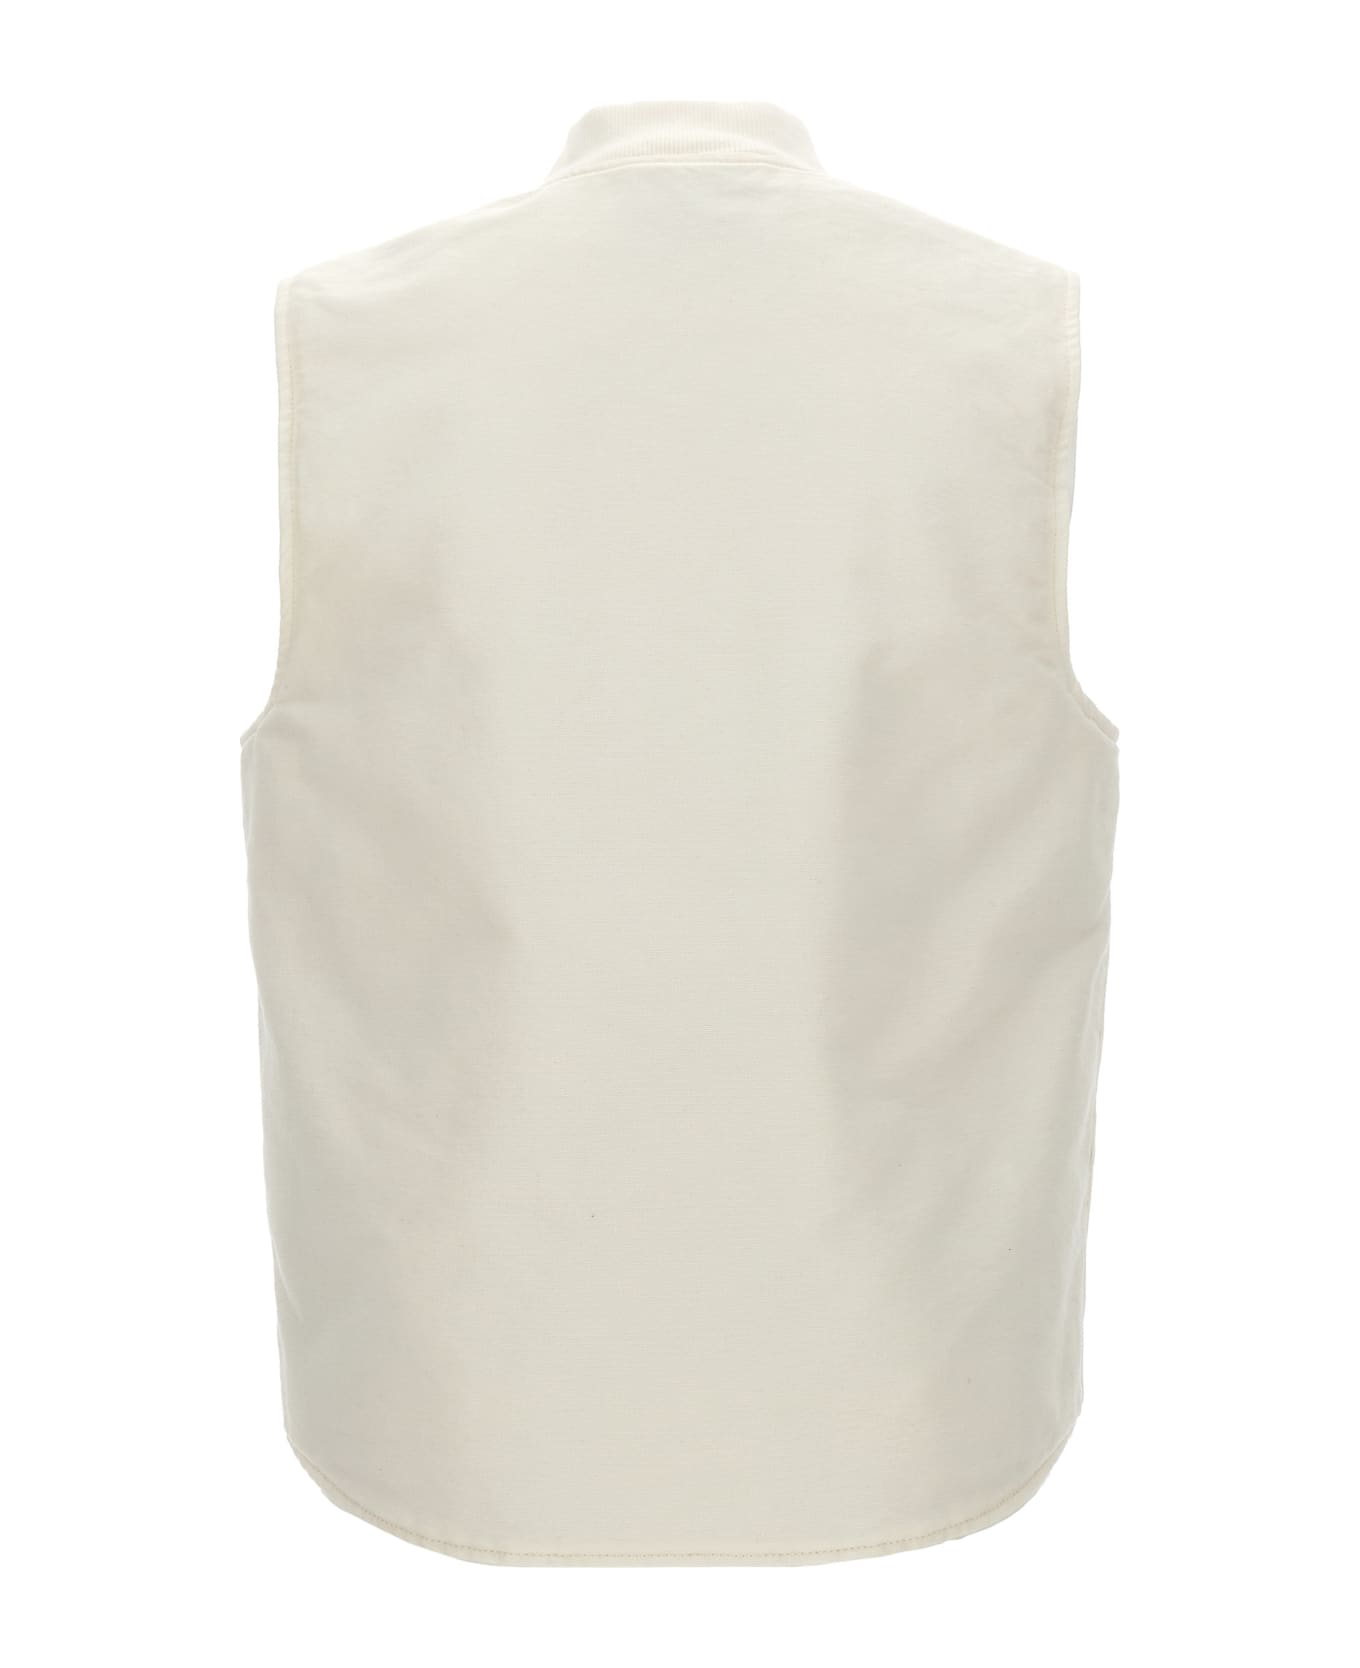 Carhartt 'classic' Vest - White